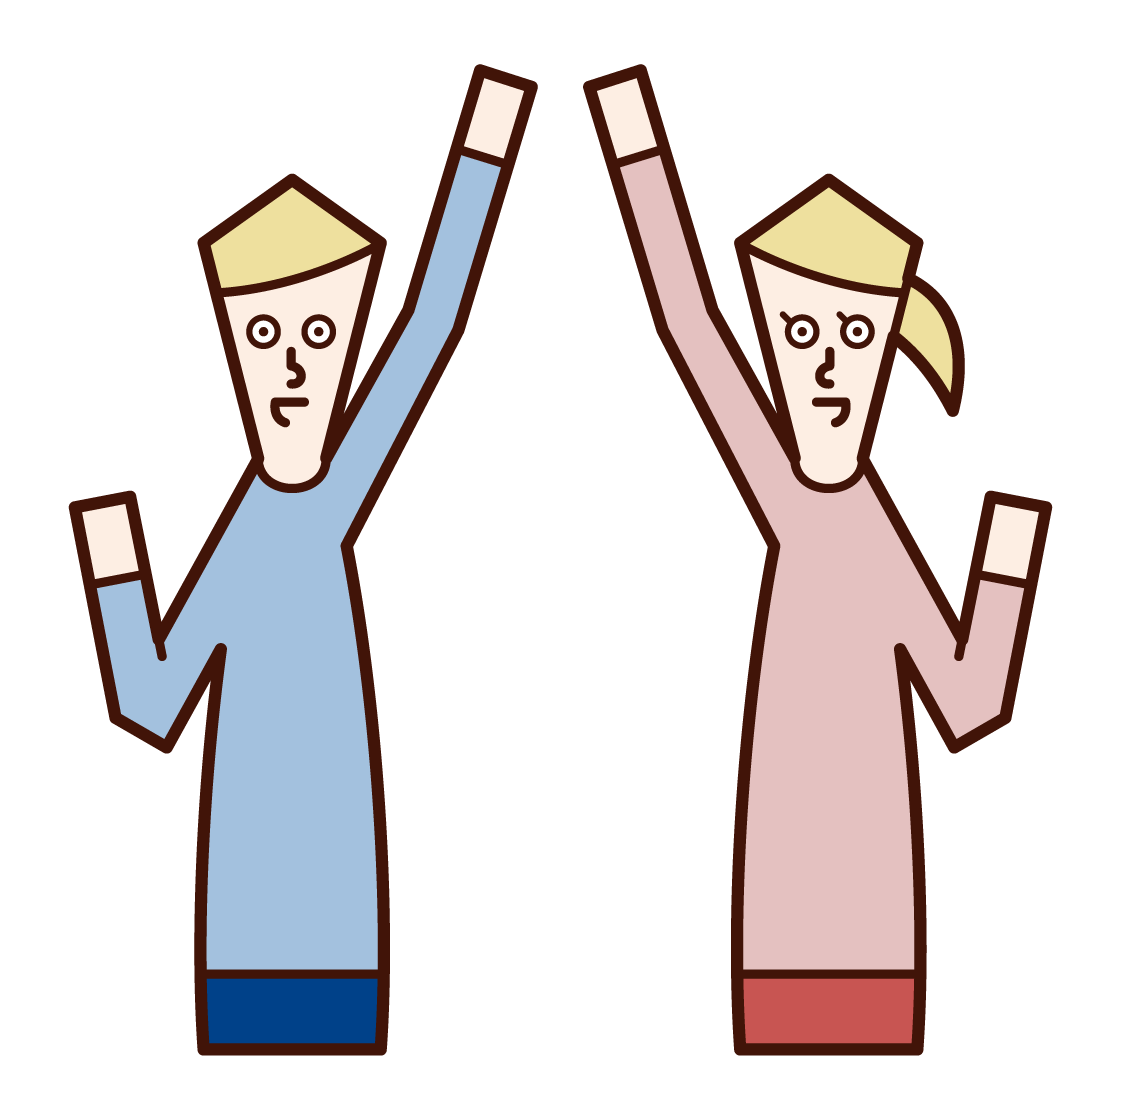 Illustration of people raising fists